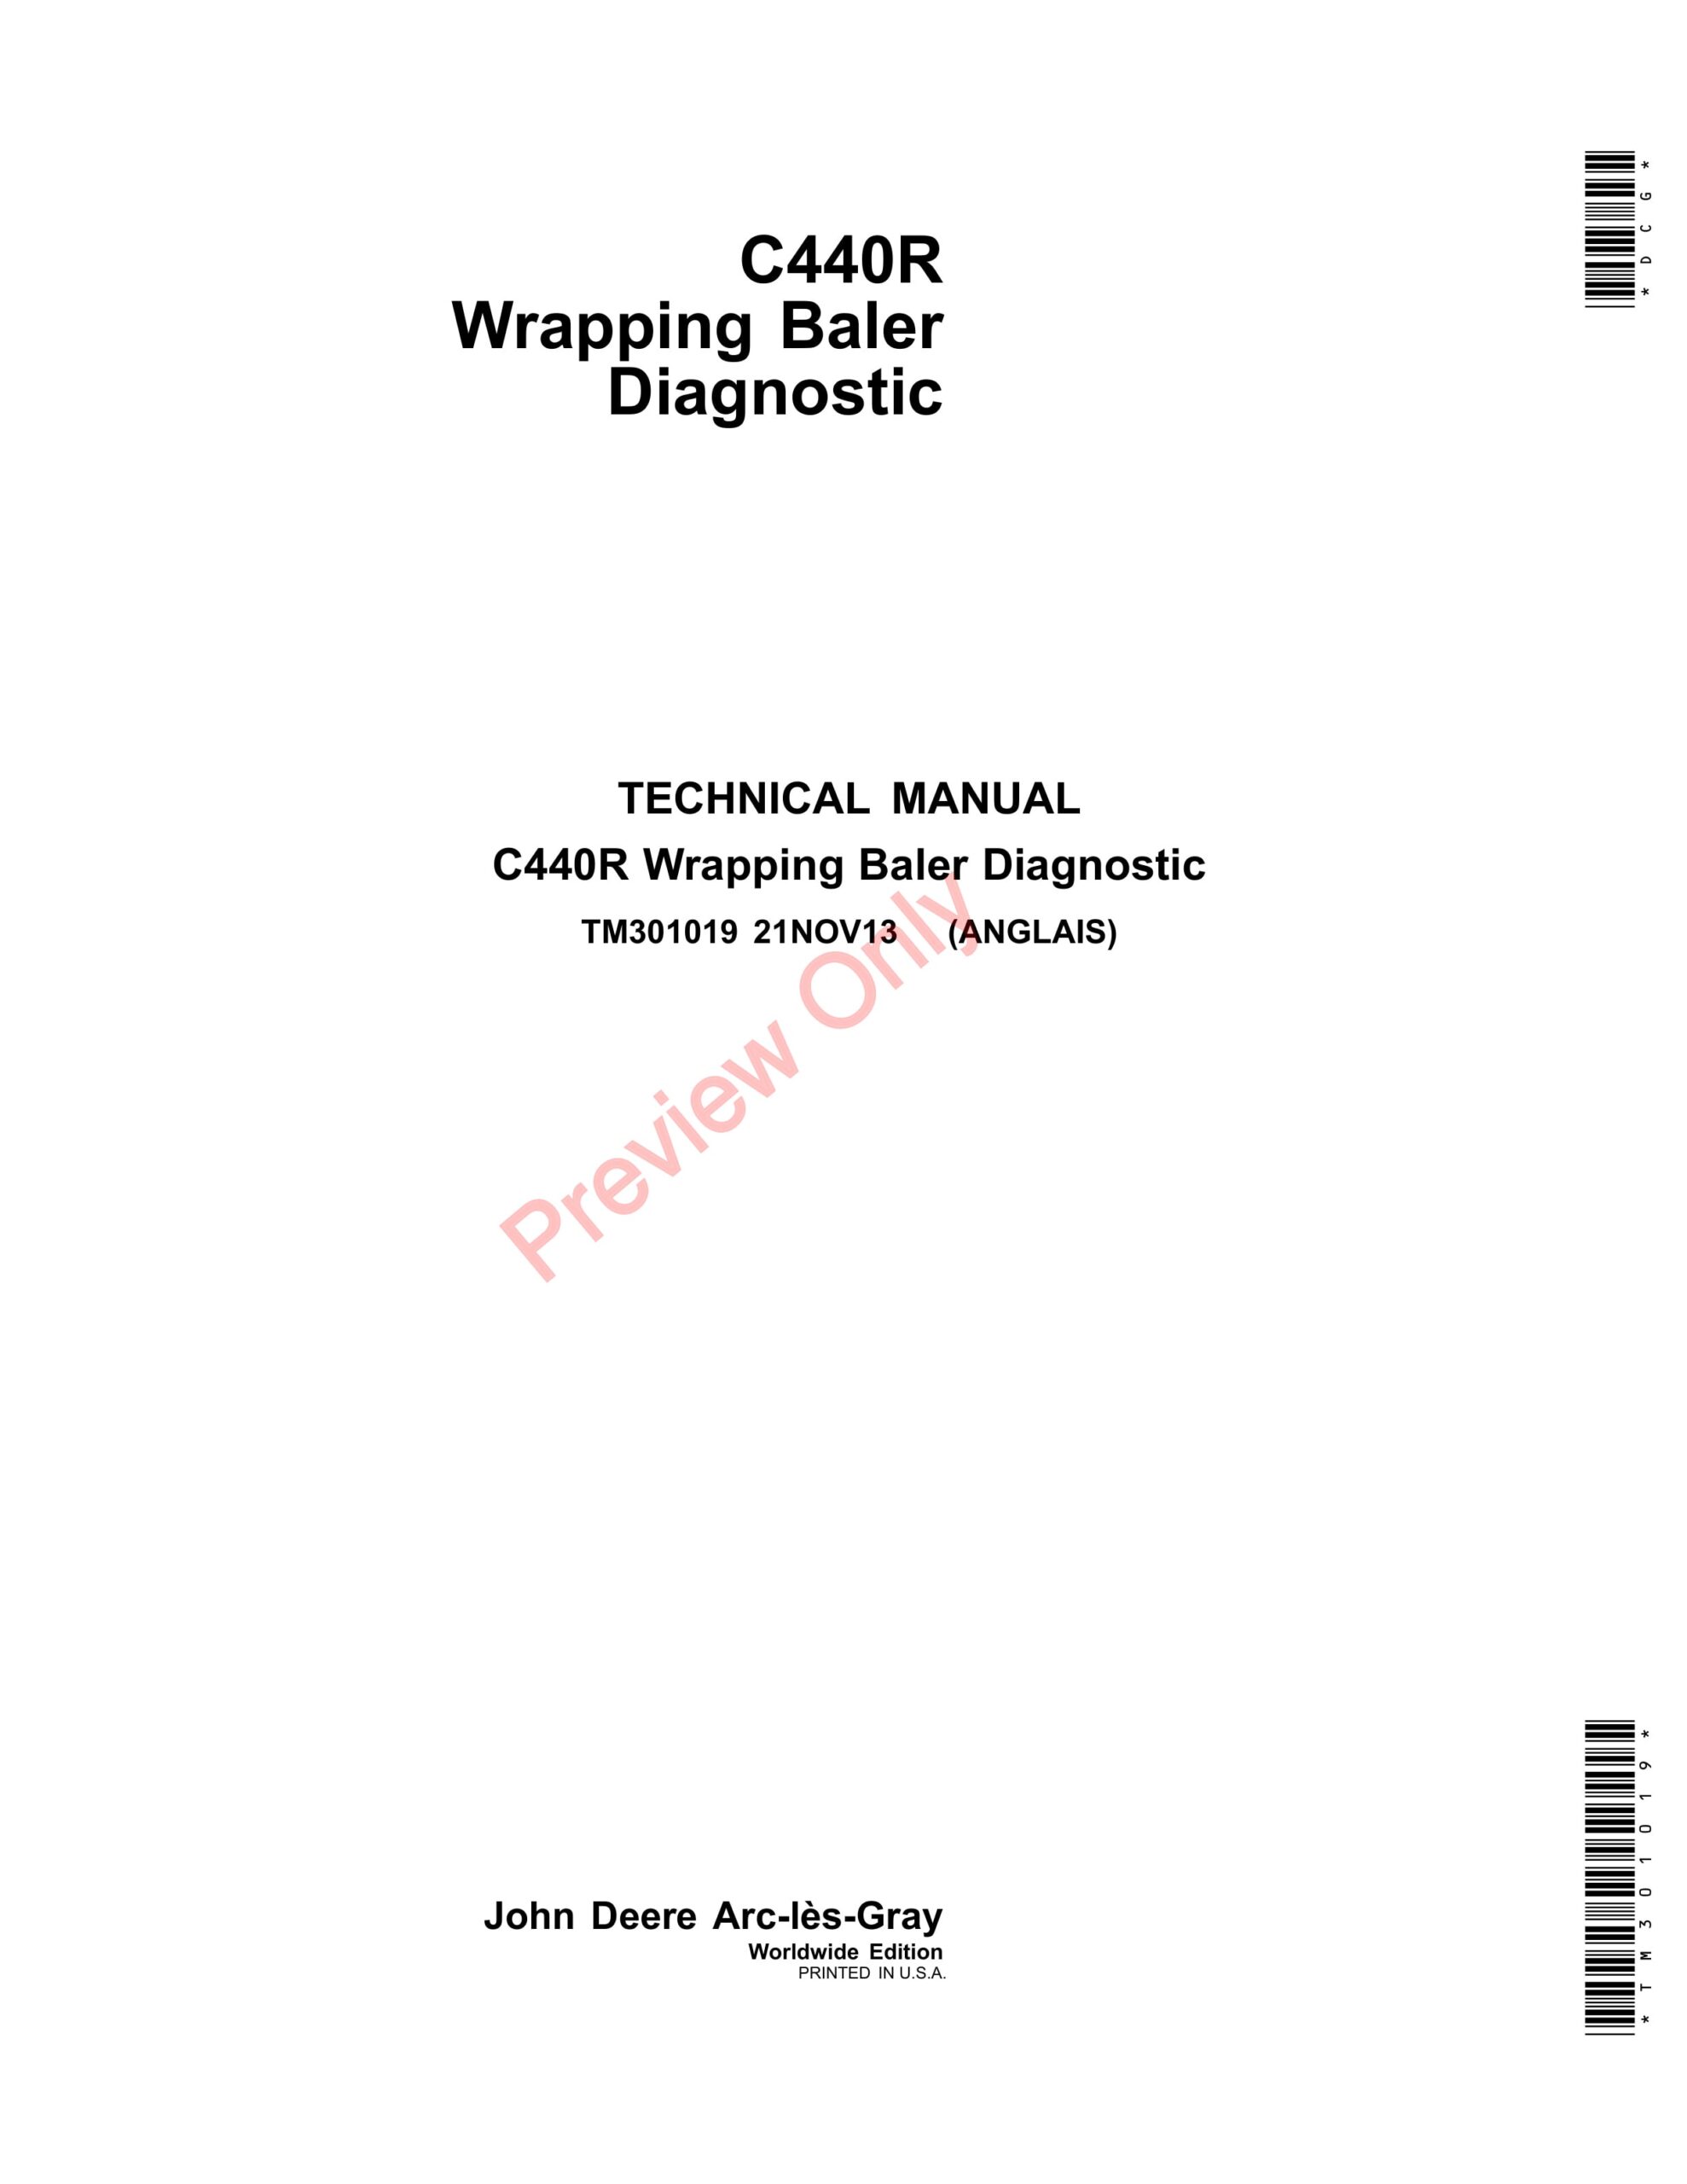 John Deere C440R Wrapping Baler Technical Manual TM301019 21NOV13-1